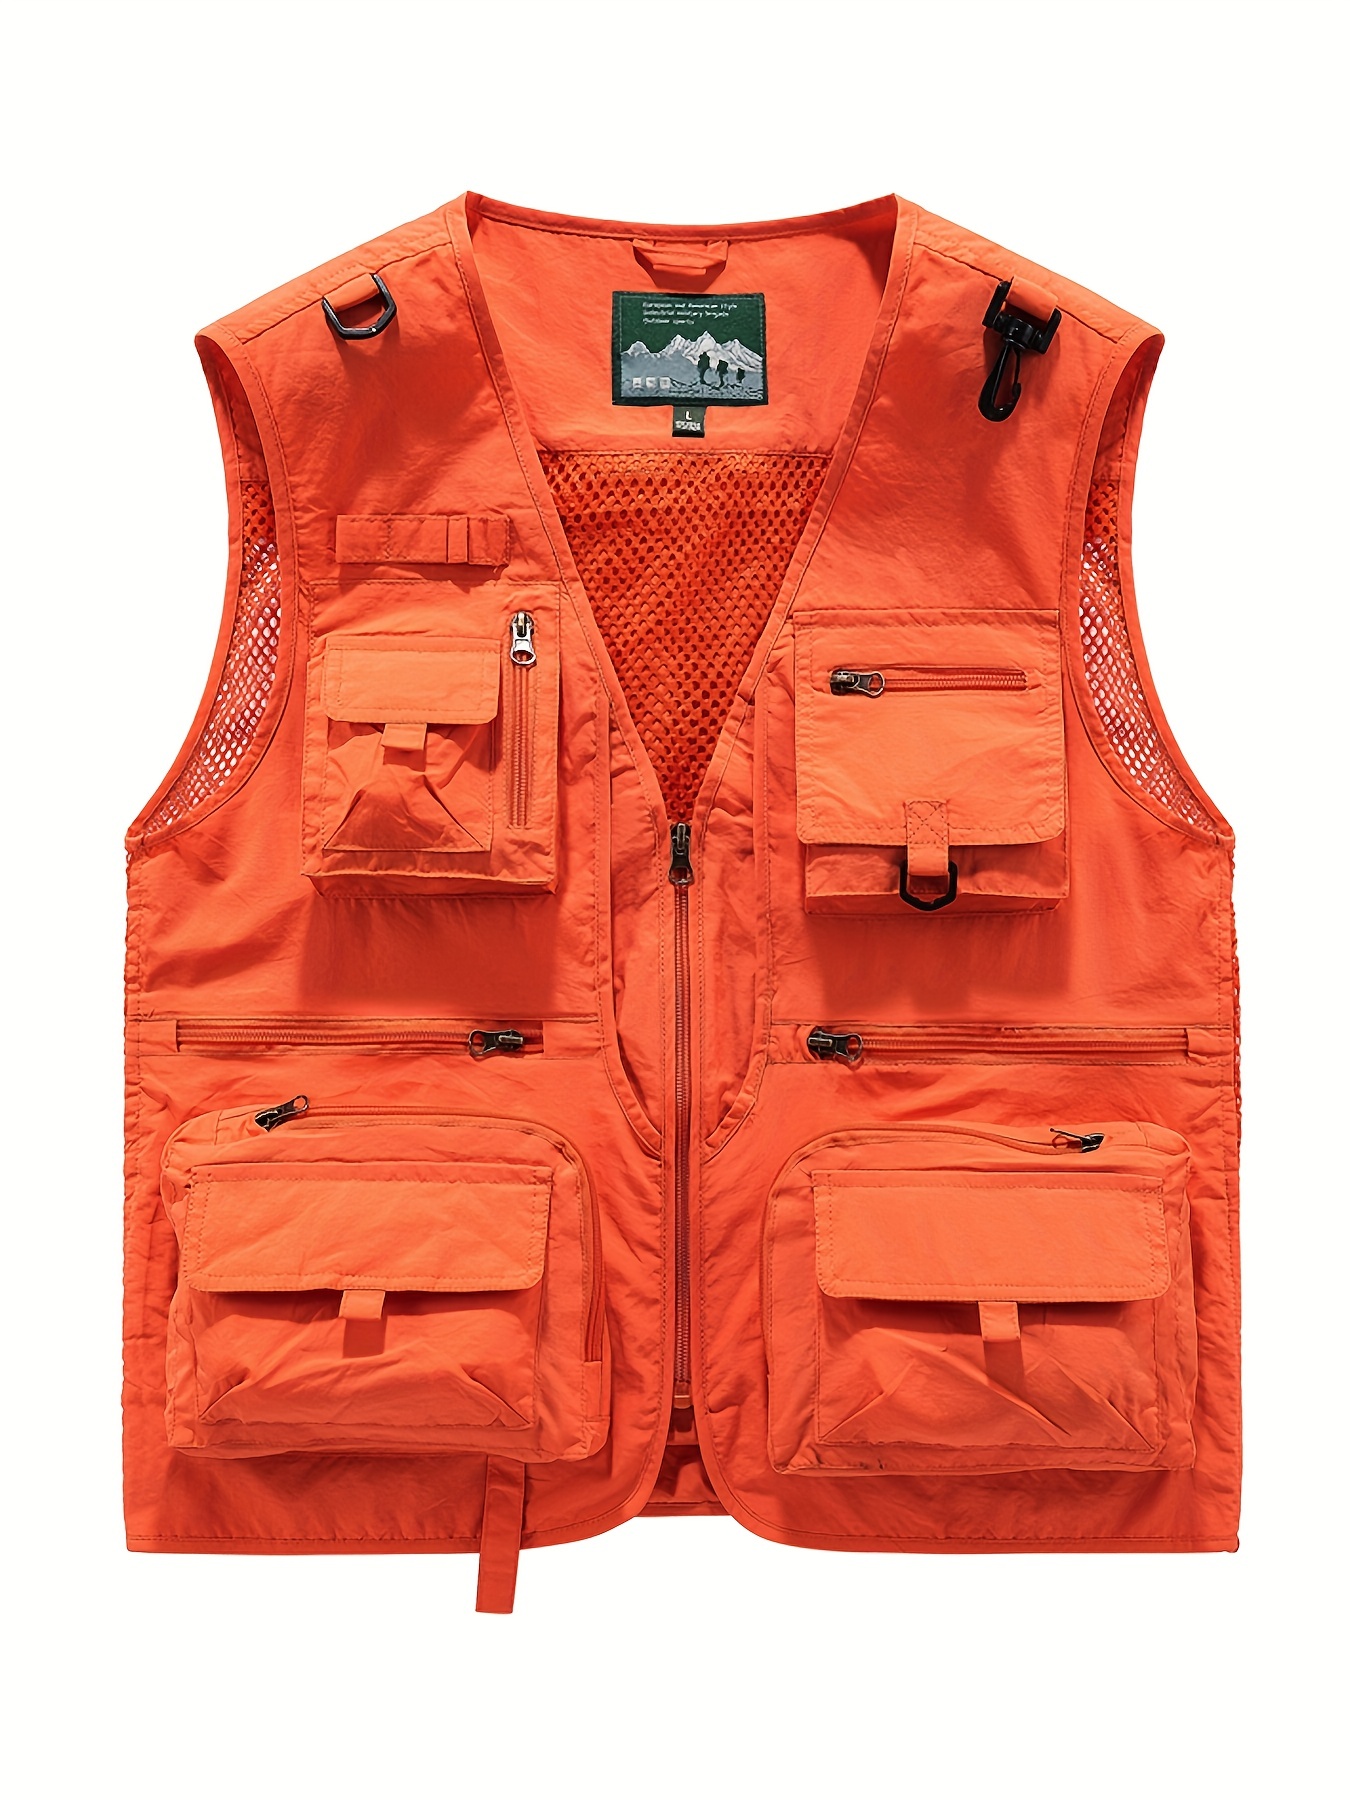 Lightweight Cargo Waistcoat Lightweight Reflective Director Fishing Vest  with Multi Pockets for Men Breathable Mesh Zipper - AliExpress